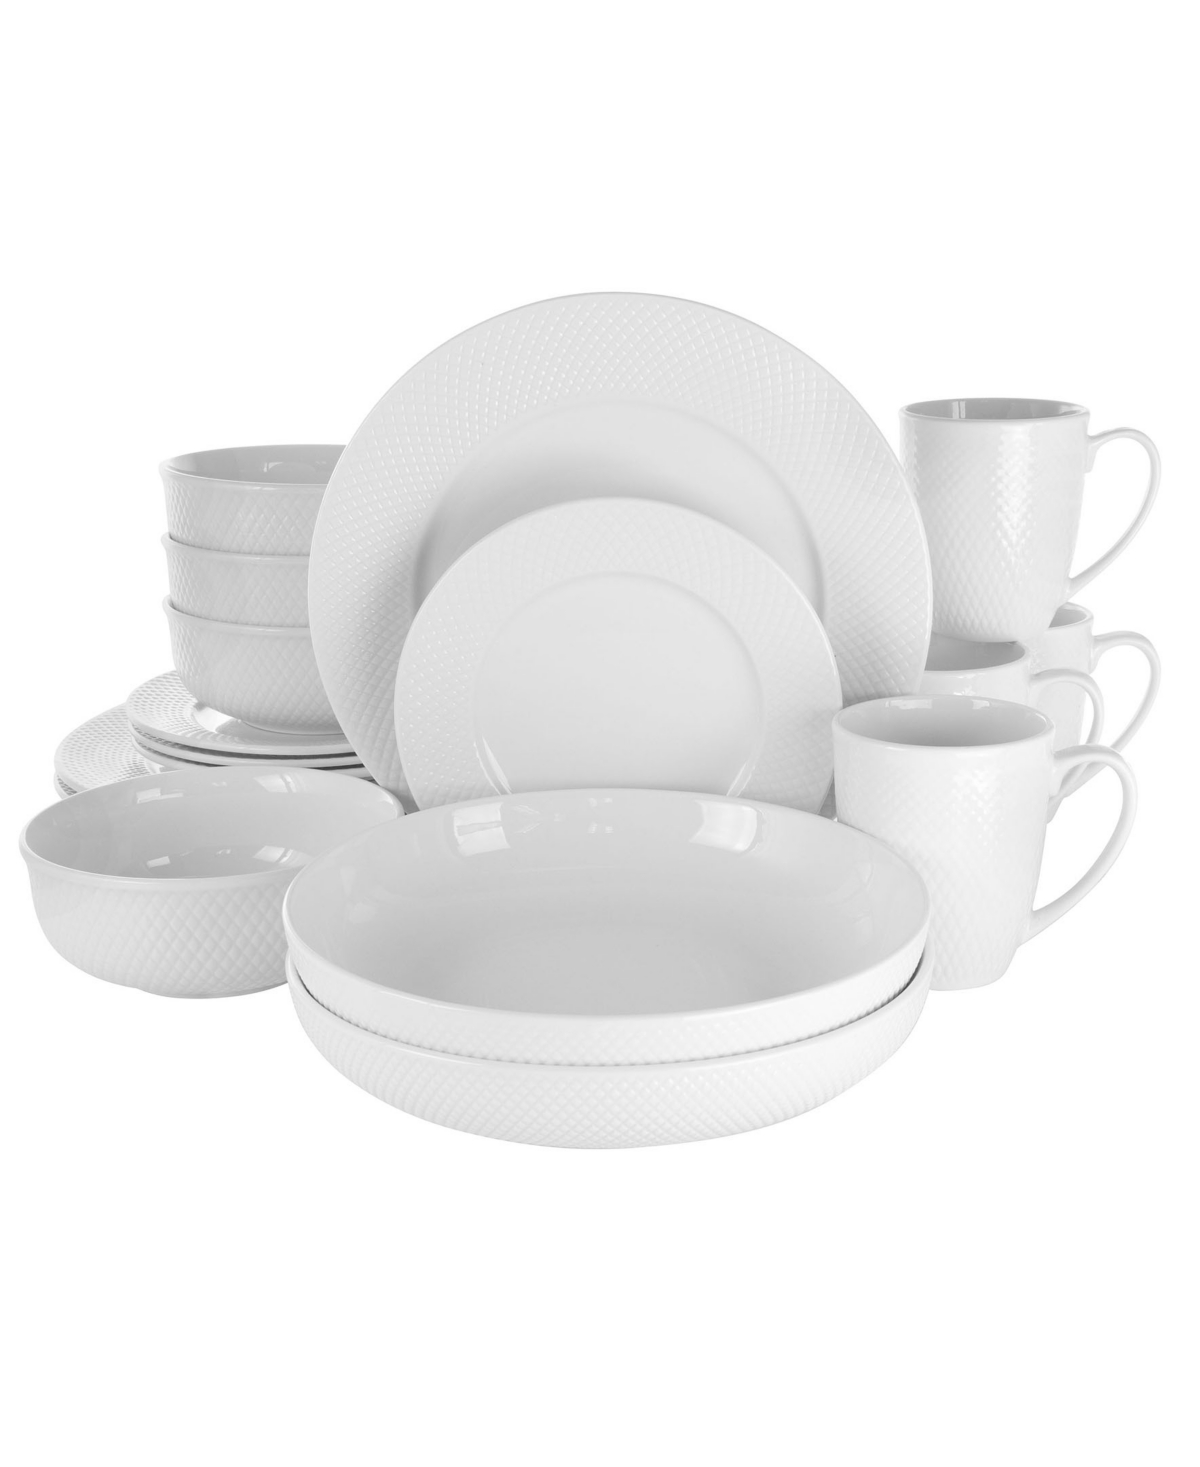 Maisy Dinnerware Set of 18 Pieces - White